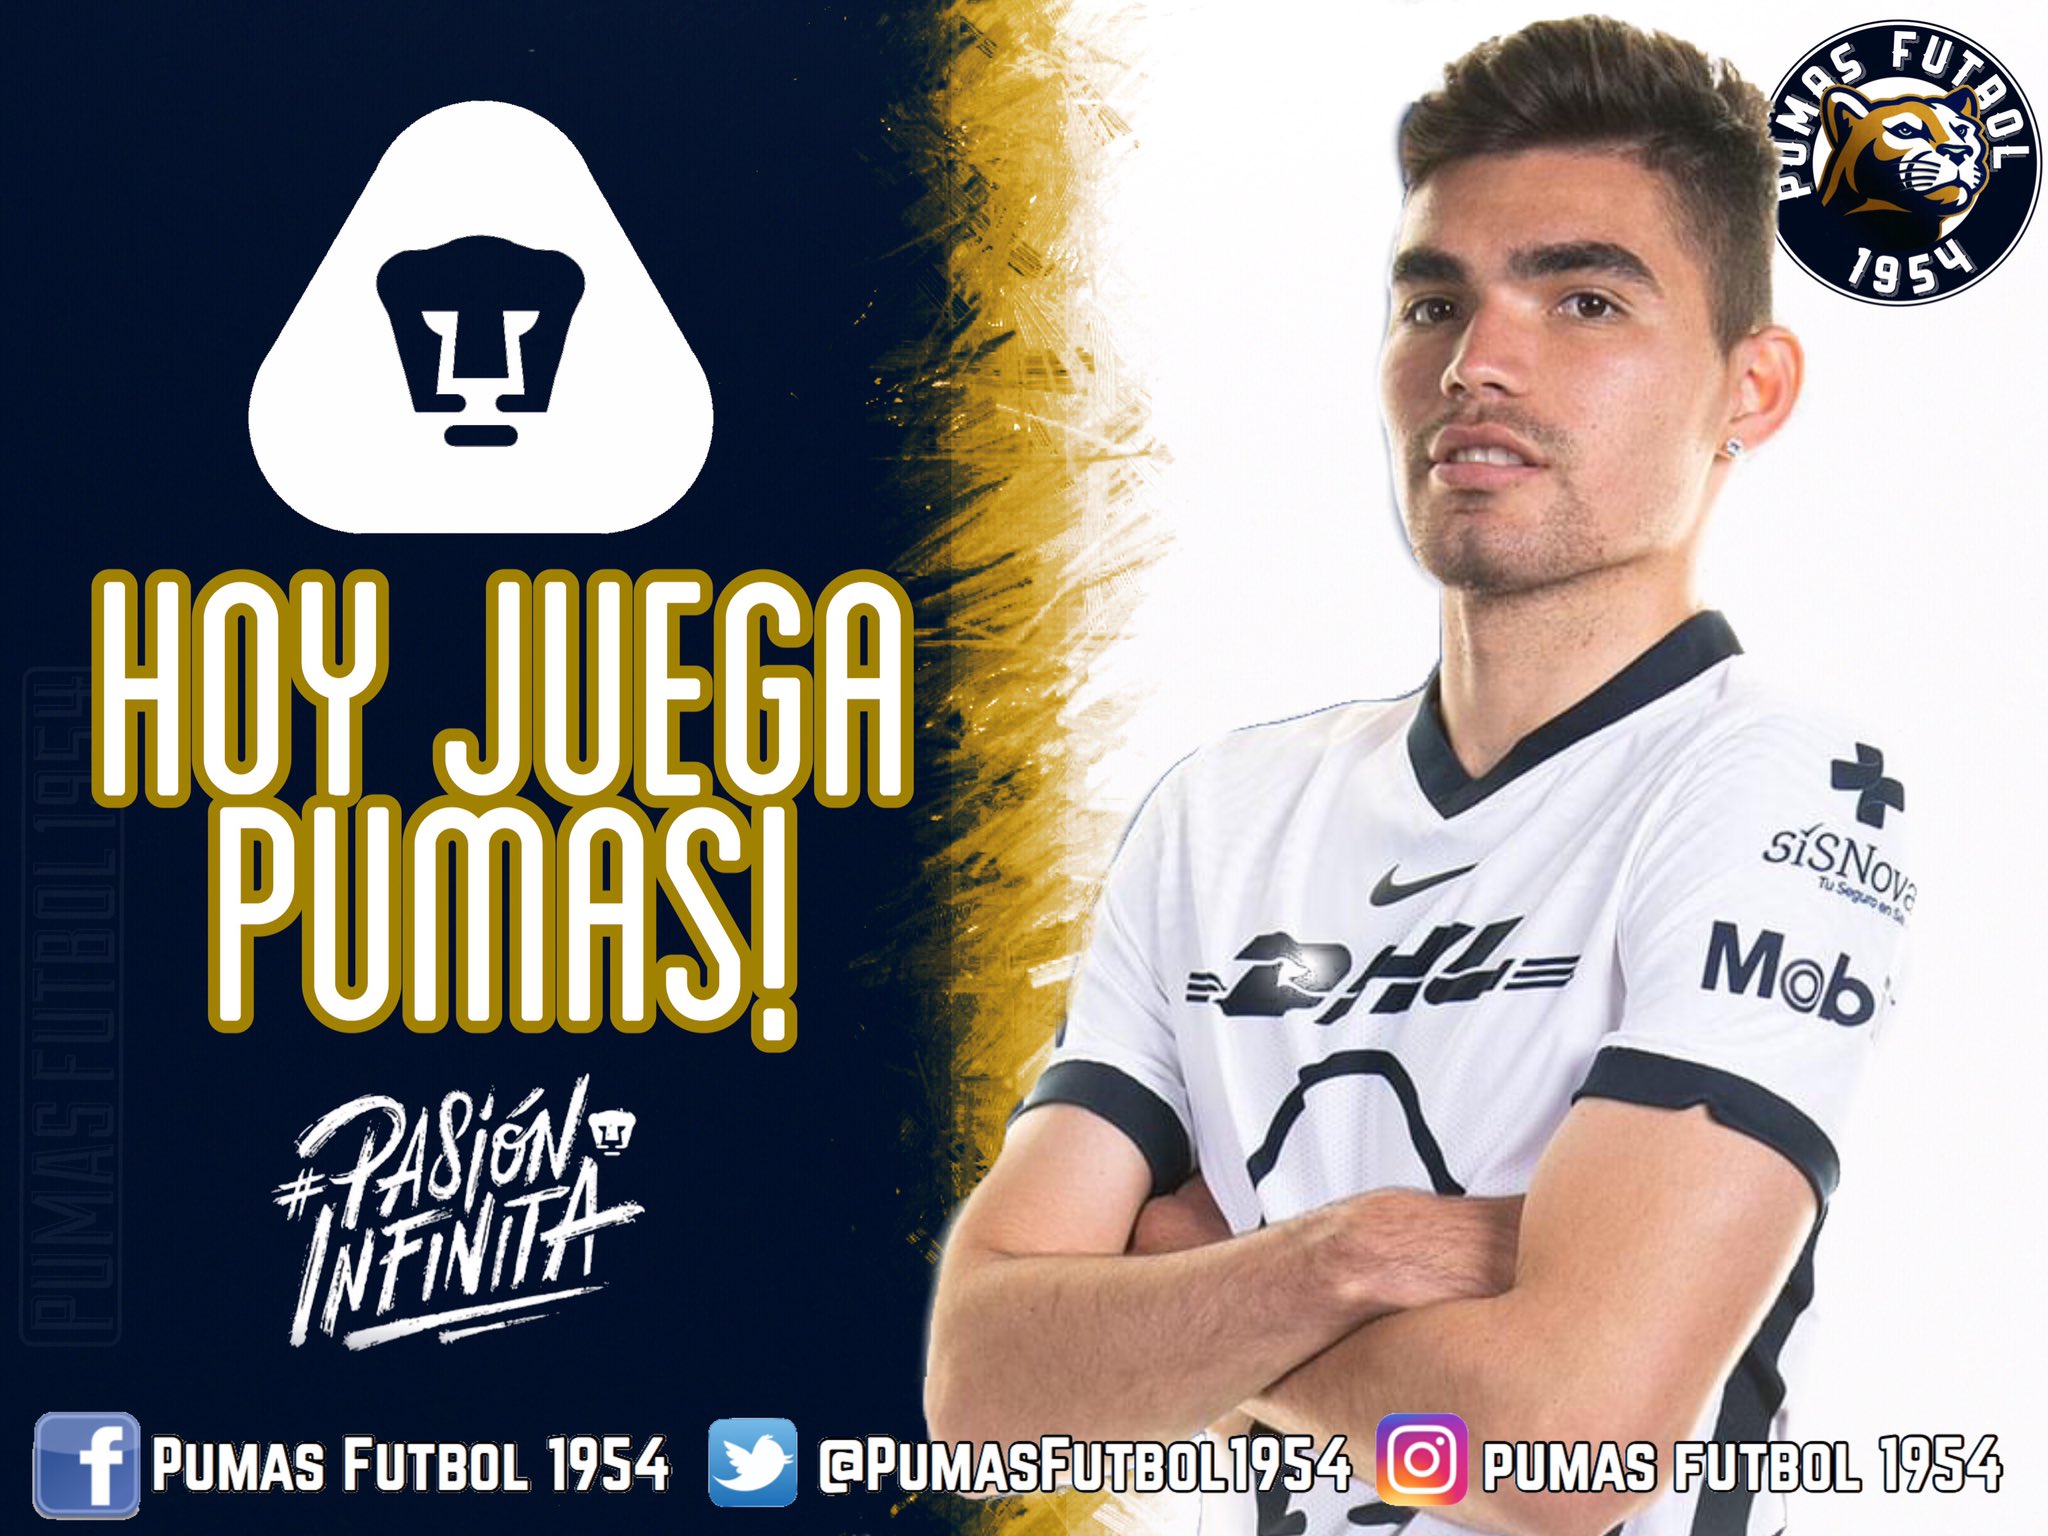 Pumas Futbol 1954 on Twitter: "HOY JUEGA !!! ⚽️ PUMAS Vs America 🏟Estadio Olímpico Universitario ⏱21:05 hrs 🖥TUDN #SoyDePumas #PumasFutbol1954 https://t.co/TFNwE7IVWo" / Twitter